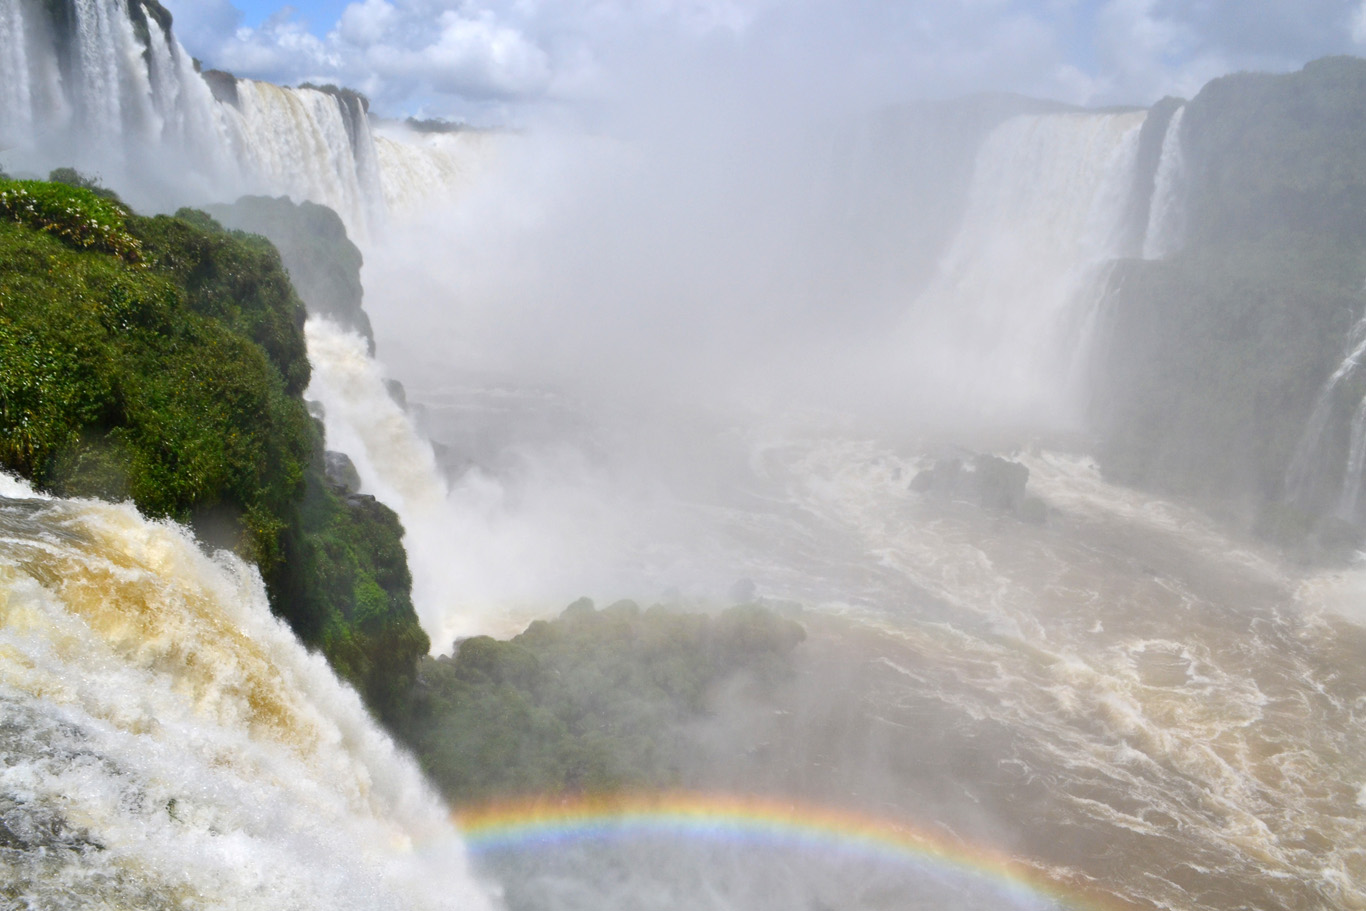 FOZ DO IGUACU, BRAZIL: Signs at the Entrance of Iguacu Falls